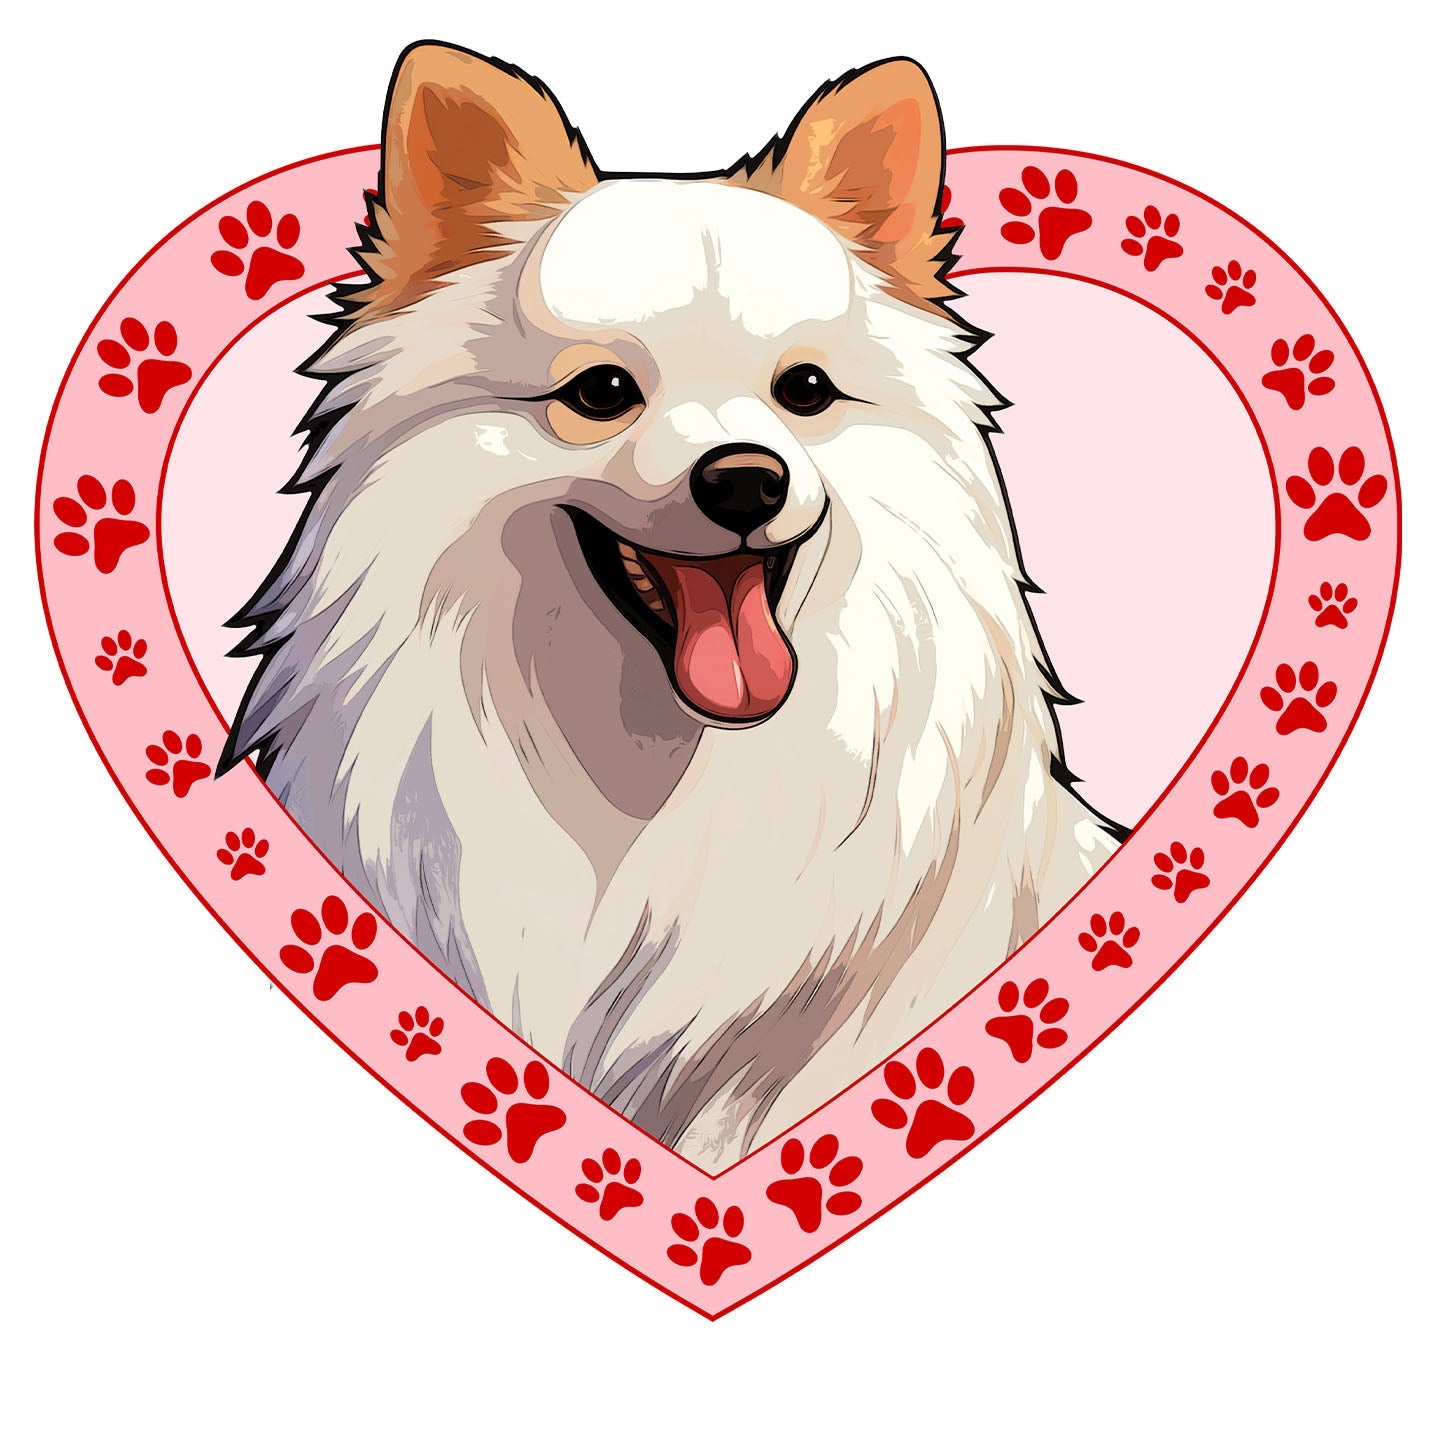 American Eskimo Dog Illustration In Heart - Adult Unisex T-Shirt